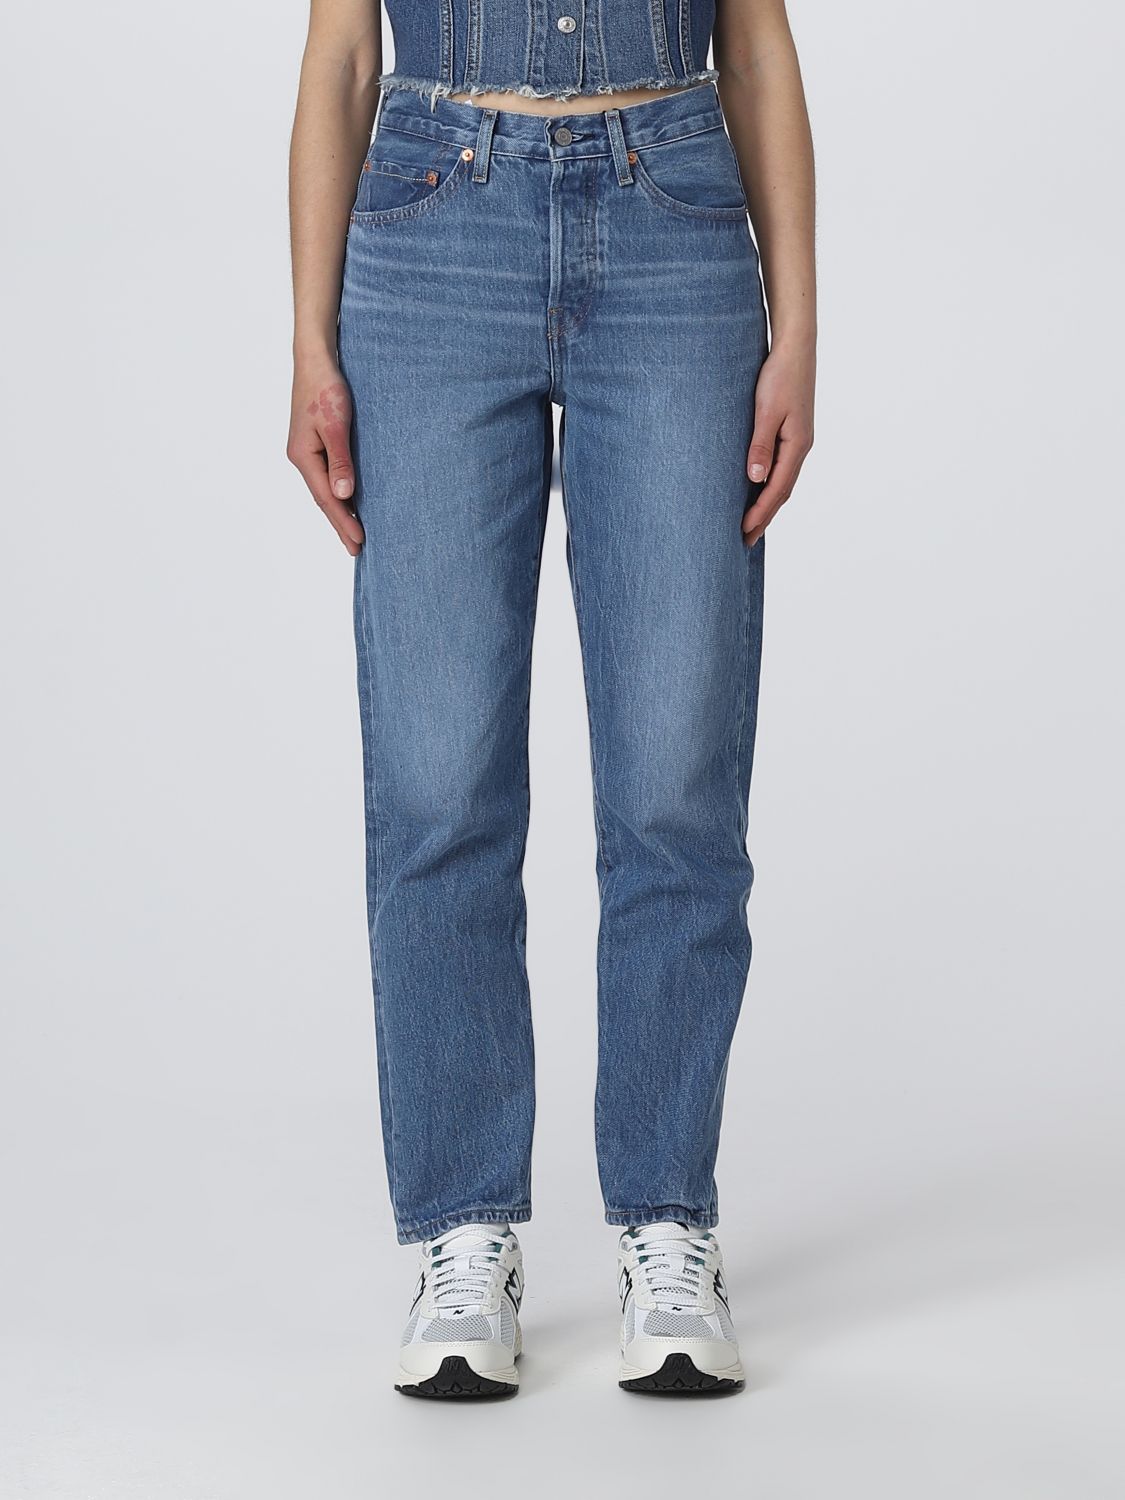 LEVI'S: jeans for woman - Denim | Levi's jeans A46990009 online on ...